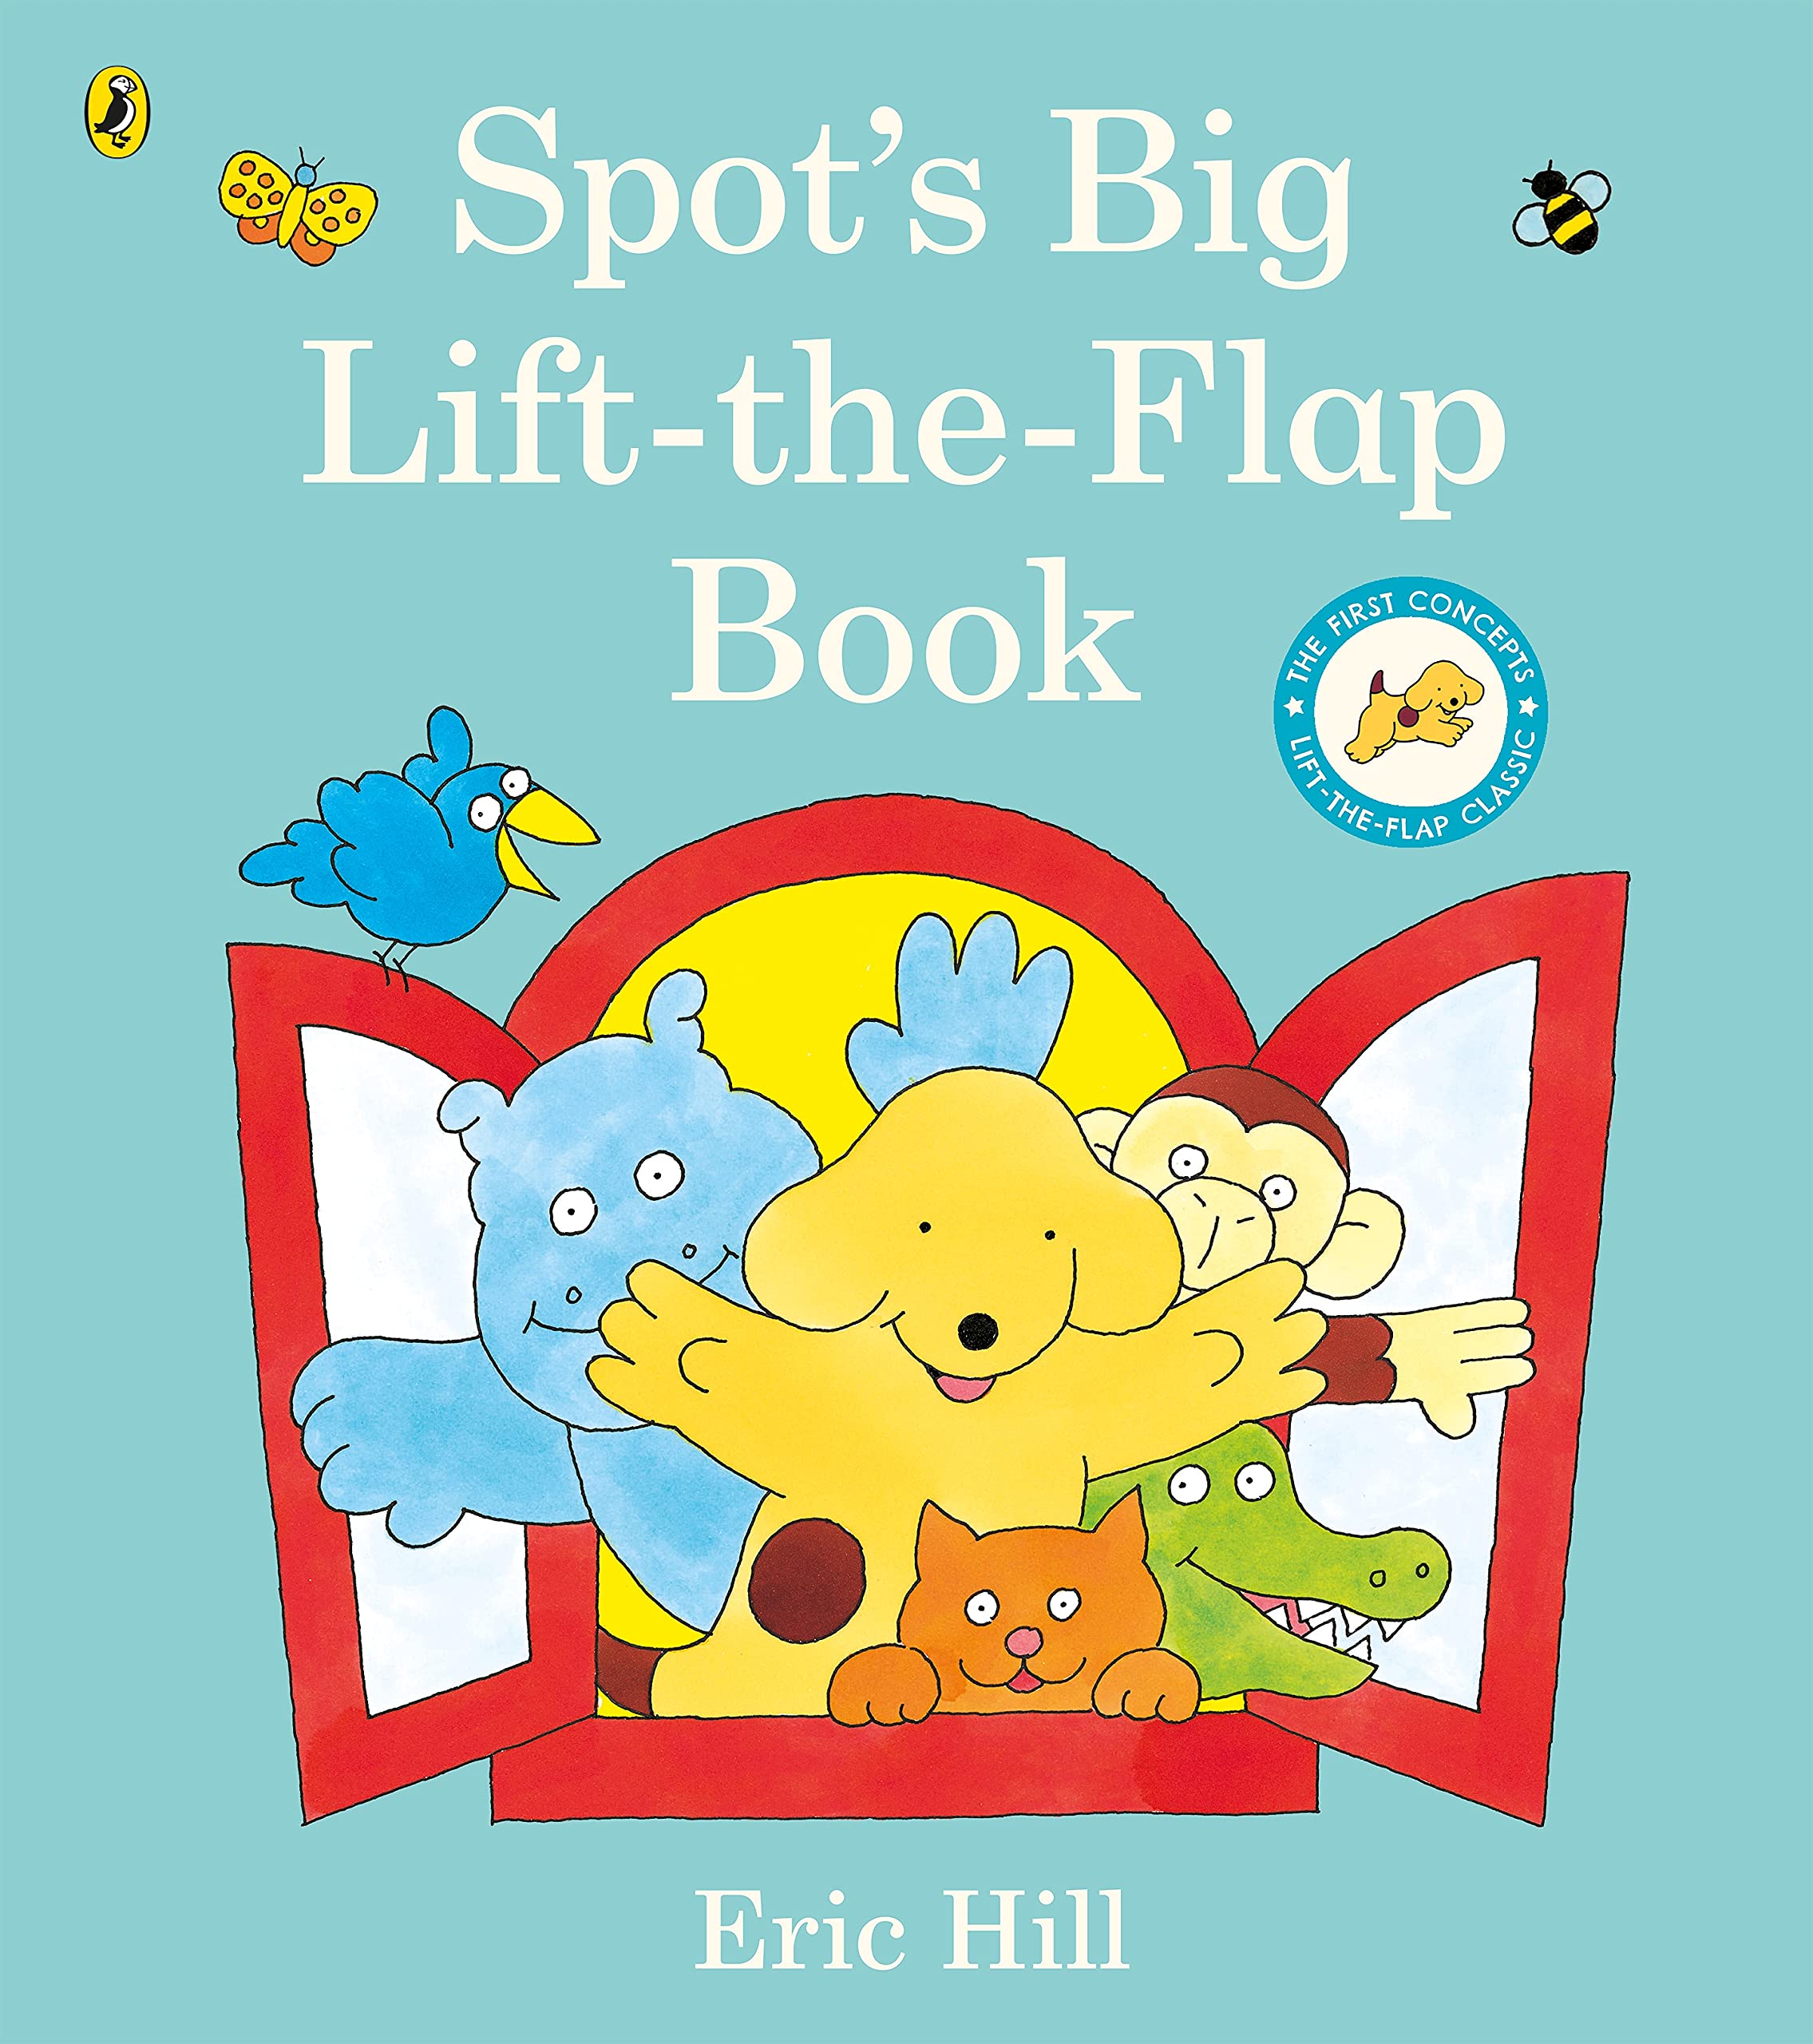 Spots-Big-Lift-the-flap-Book.jpg